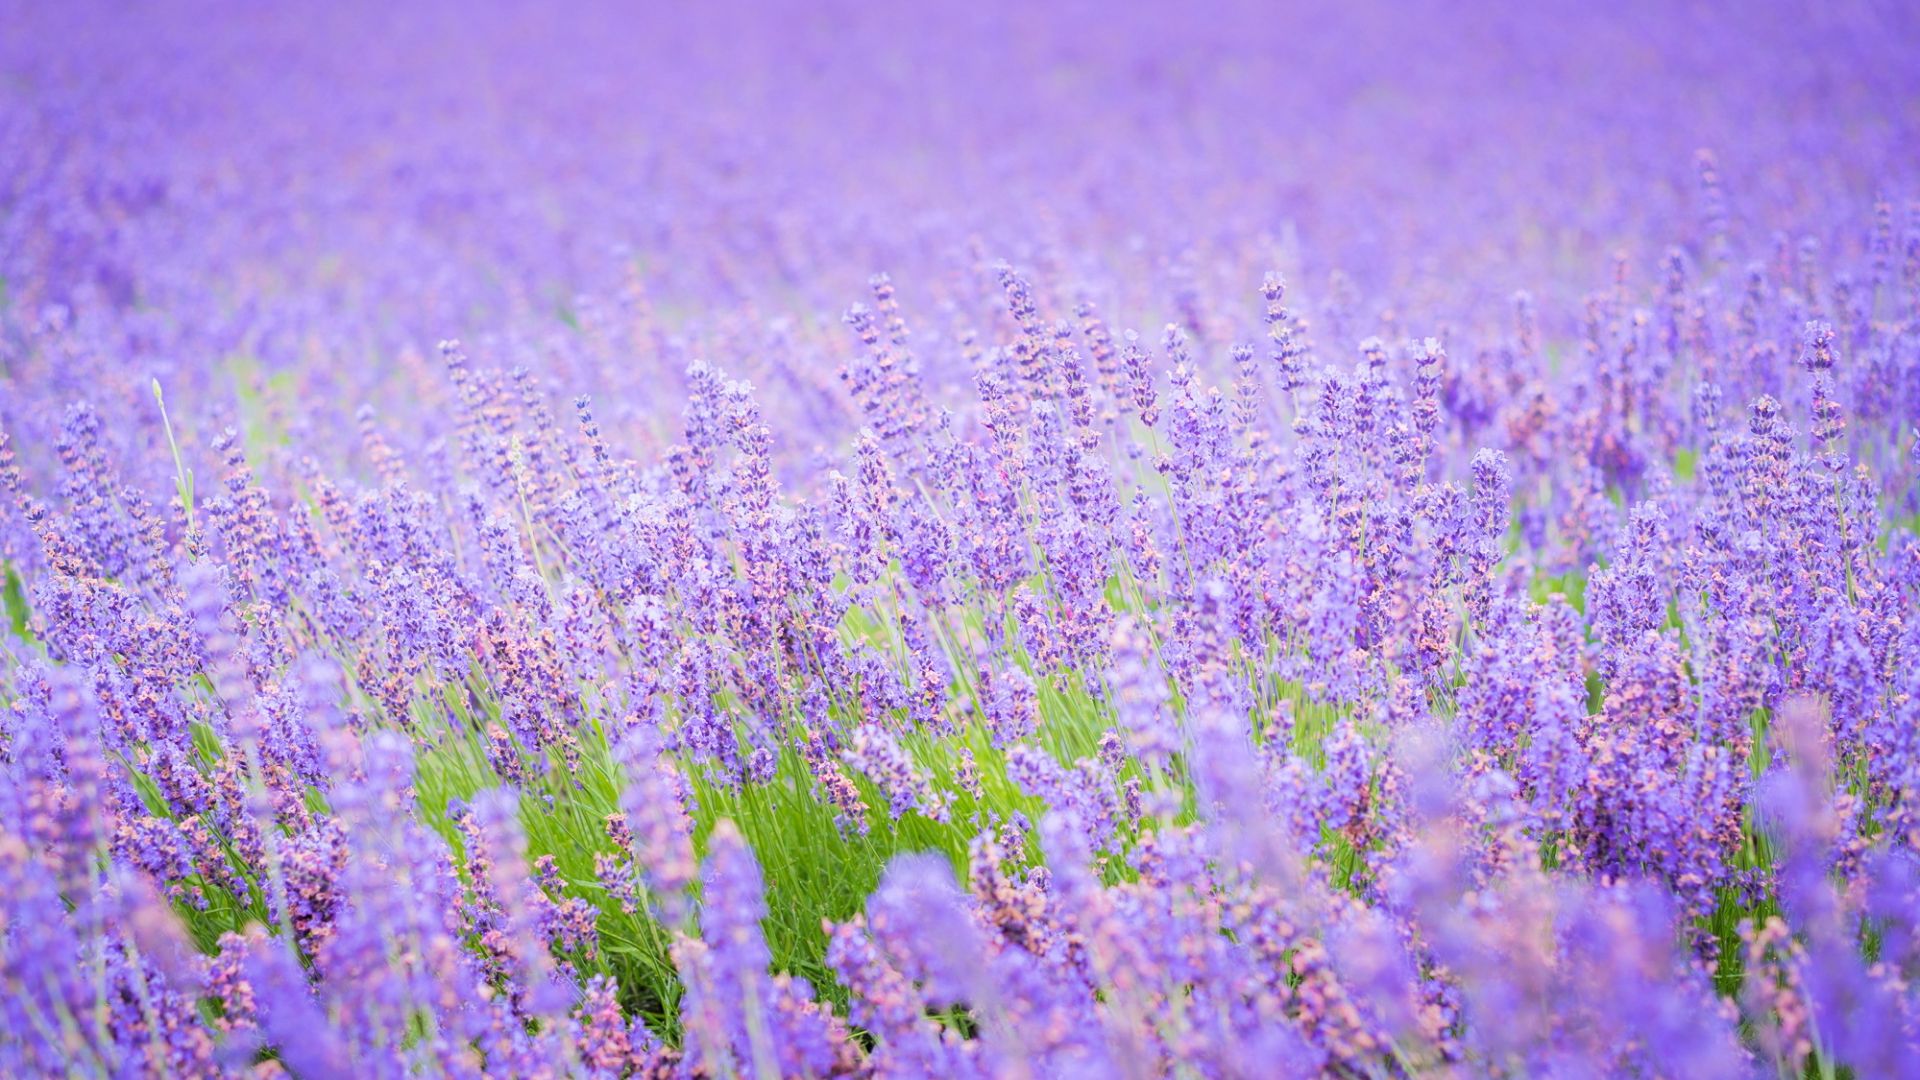 Desktop Wallpaper Lavender Flowers, Purple Flower Field, Hd Image, Picture,  Background, Zofihh